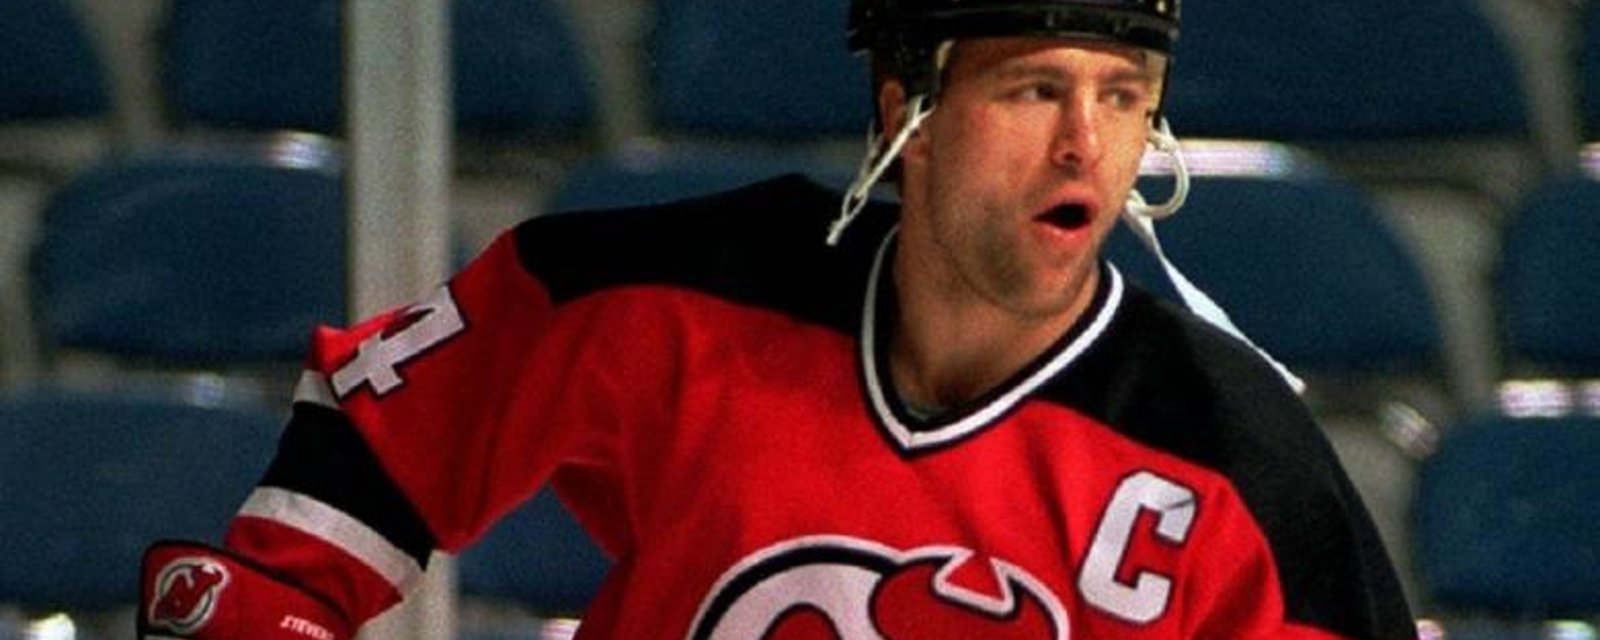 NHL legend Scott Stevens will be coaching another NHL team.